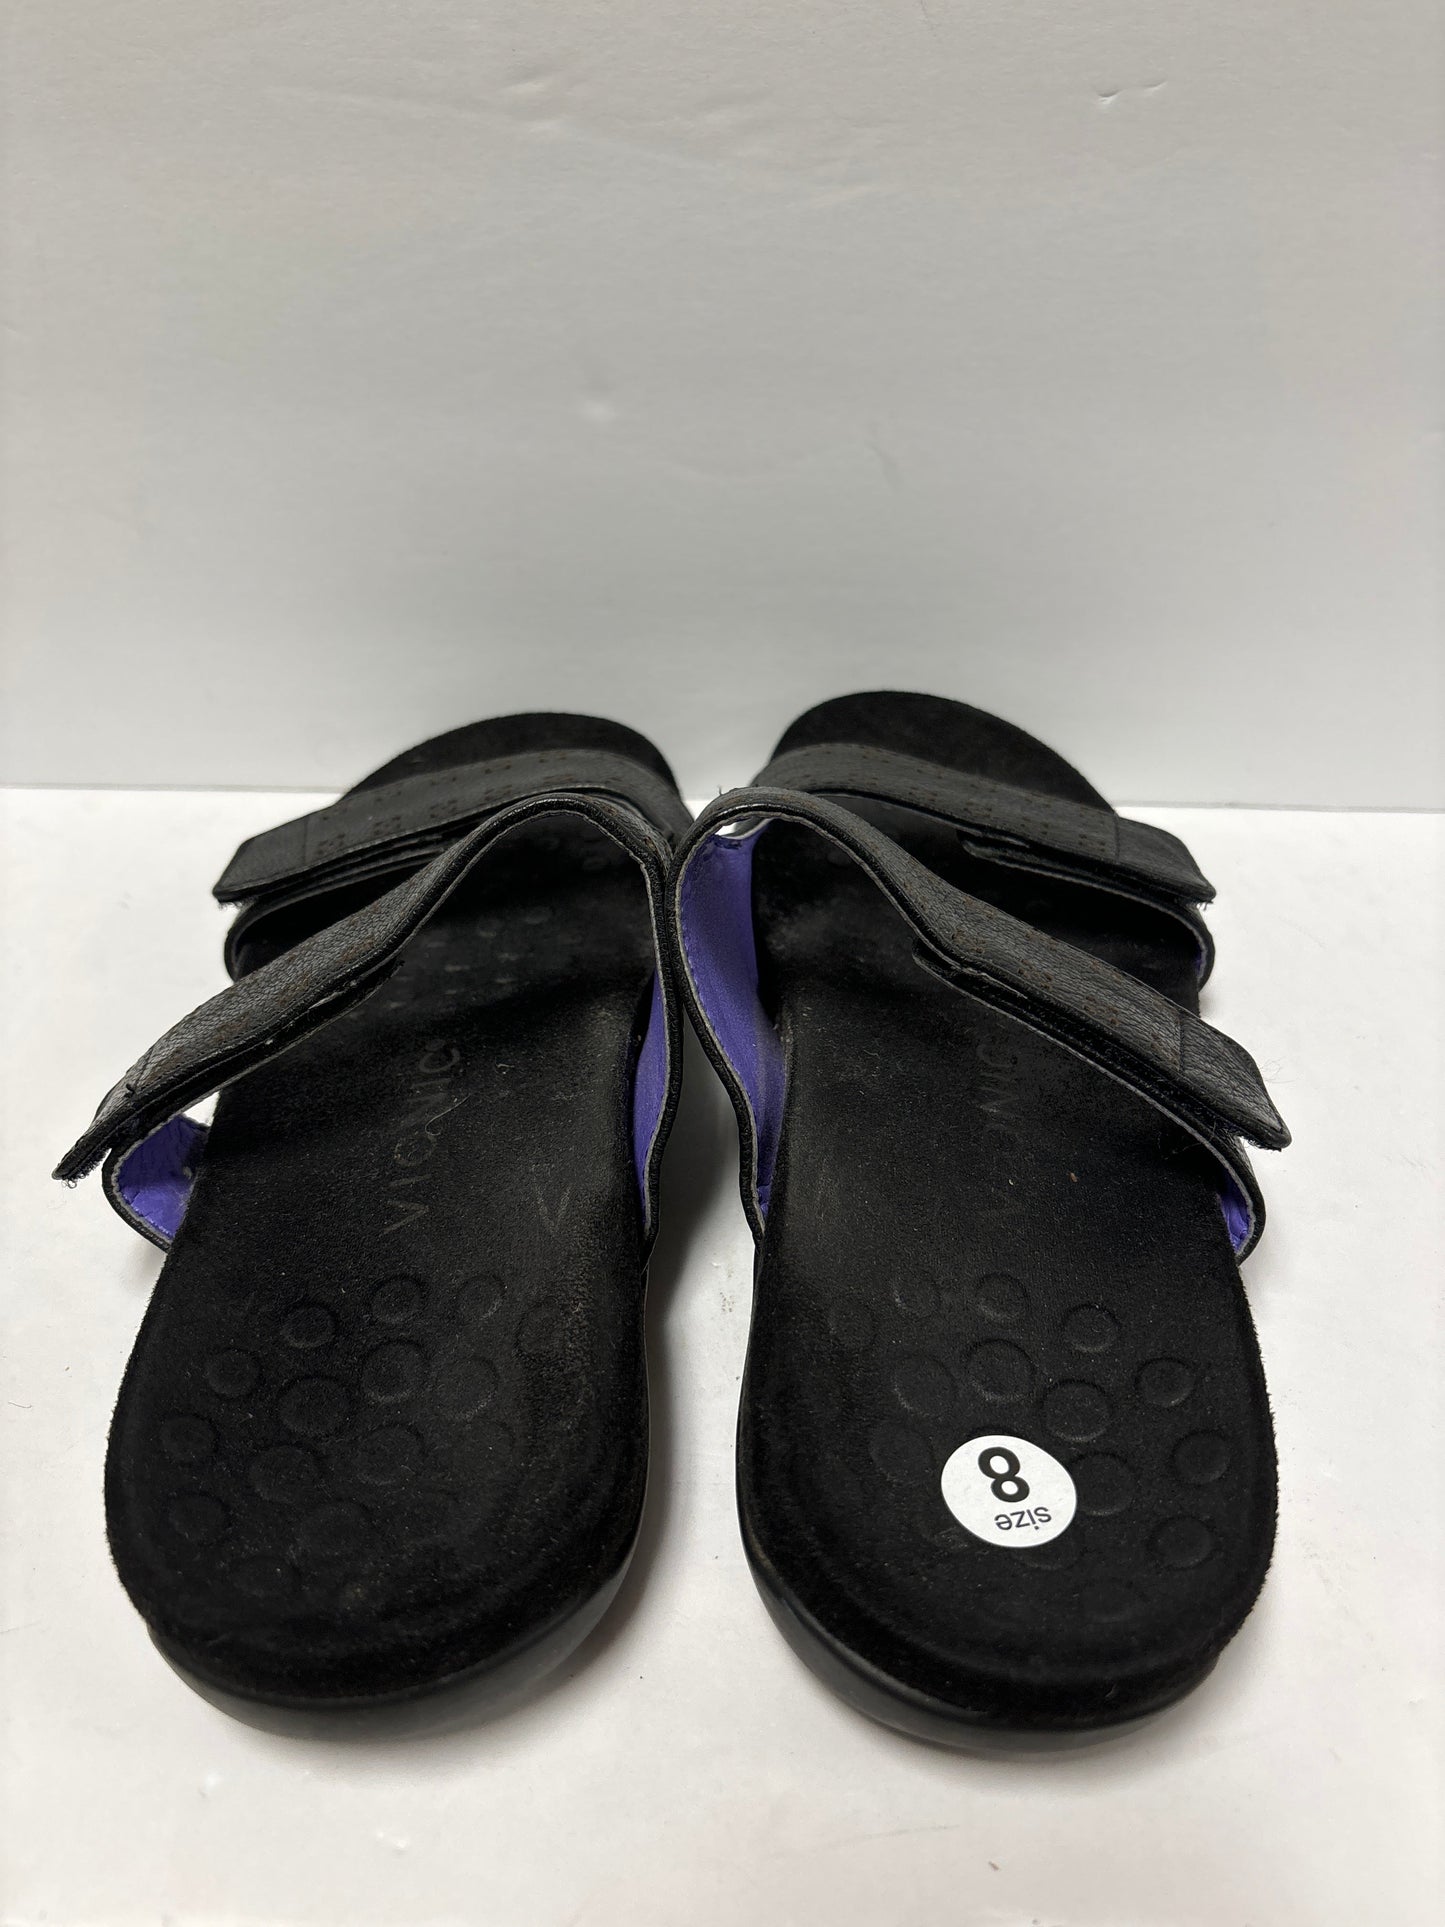 Black Sandals Flats Vionic, Size 8